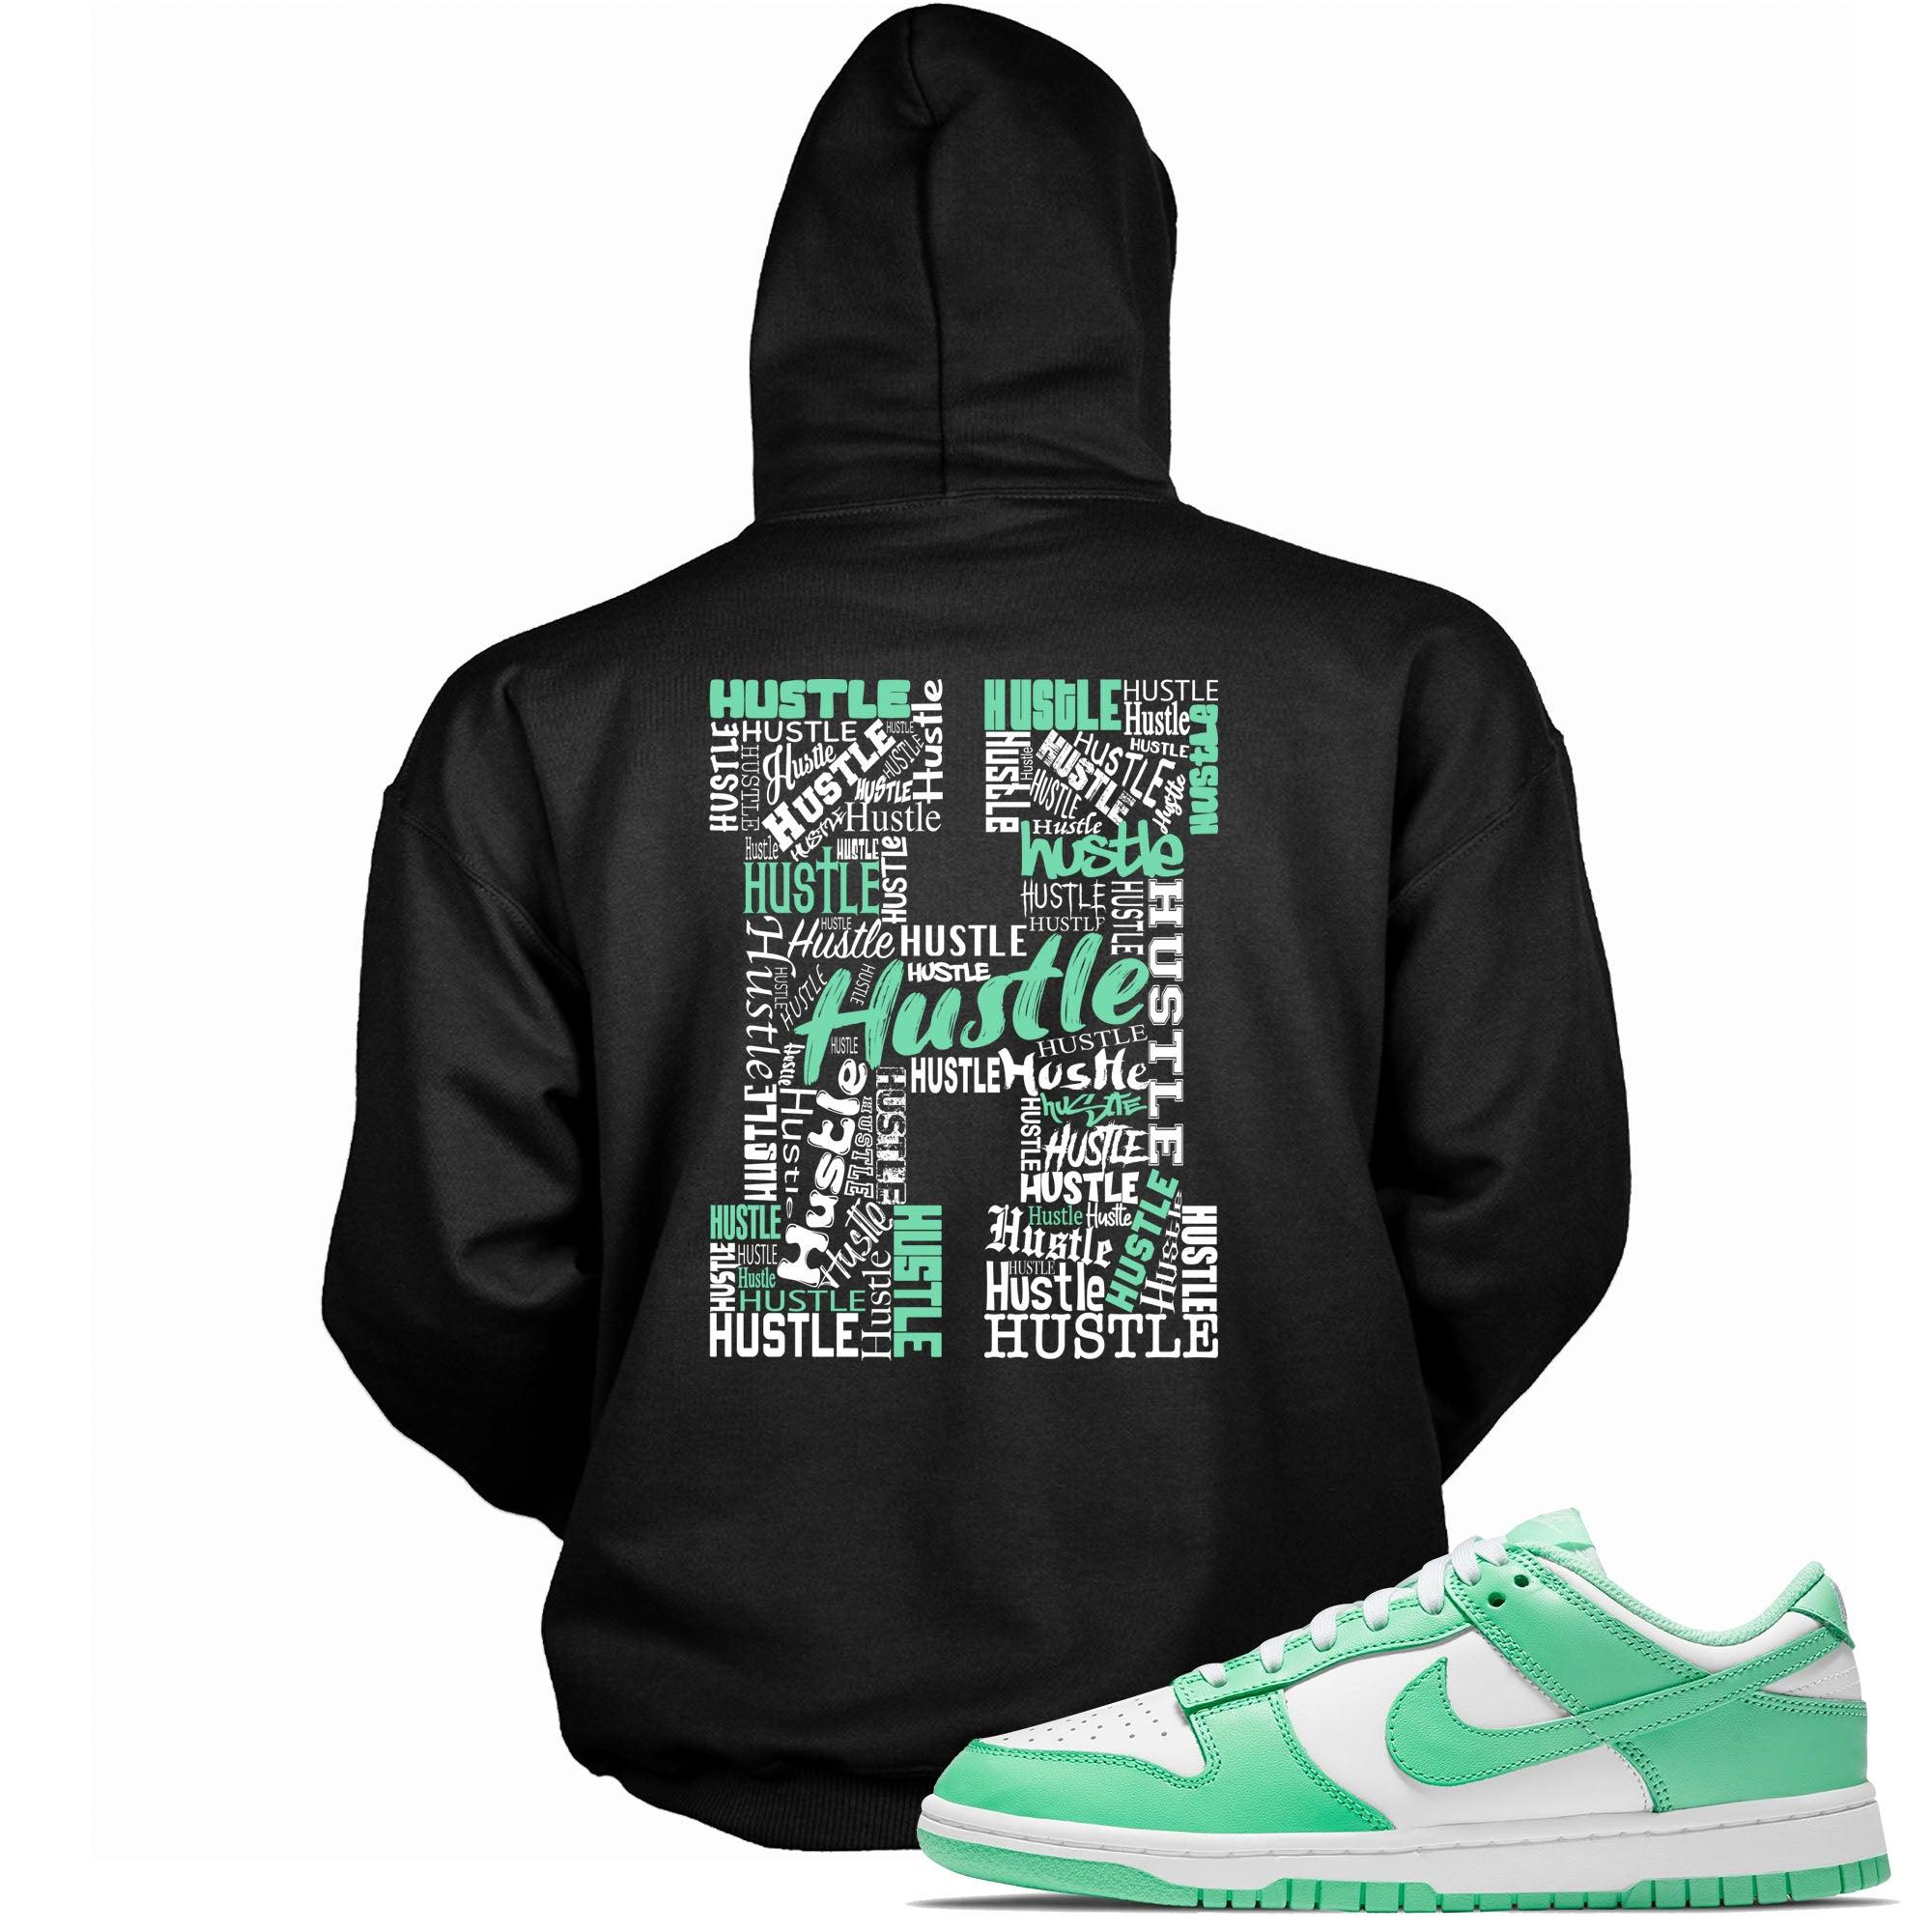 Black H For Hustle Hoodie Nike Dunks Low Green Glow photo